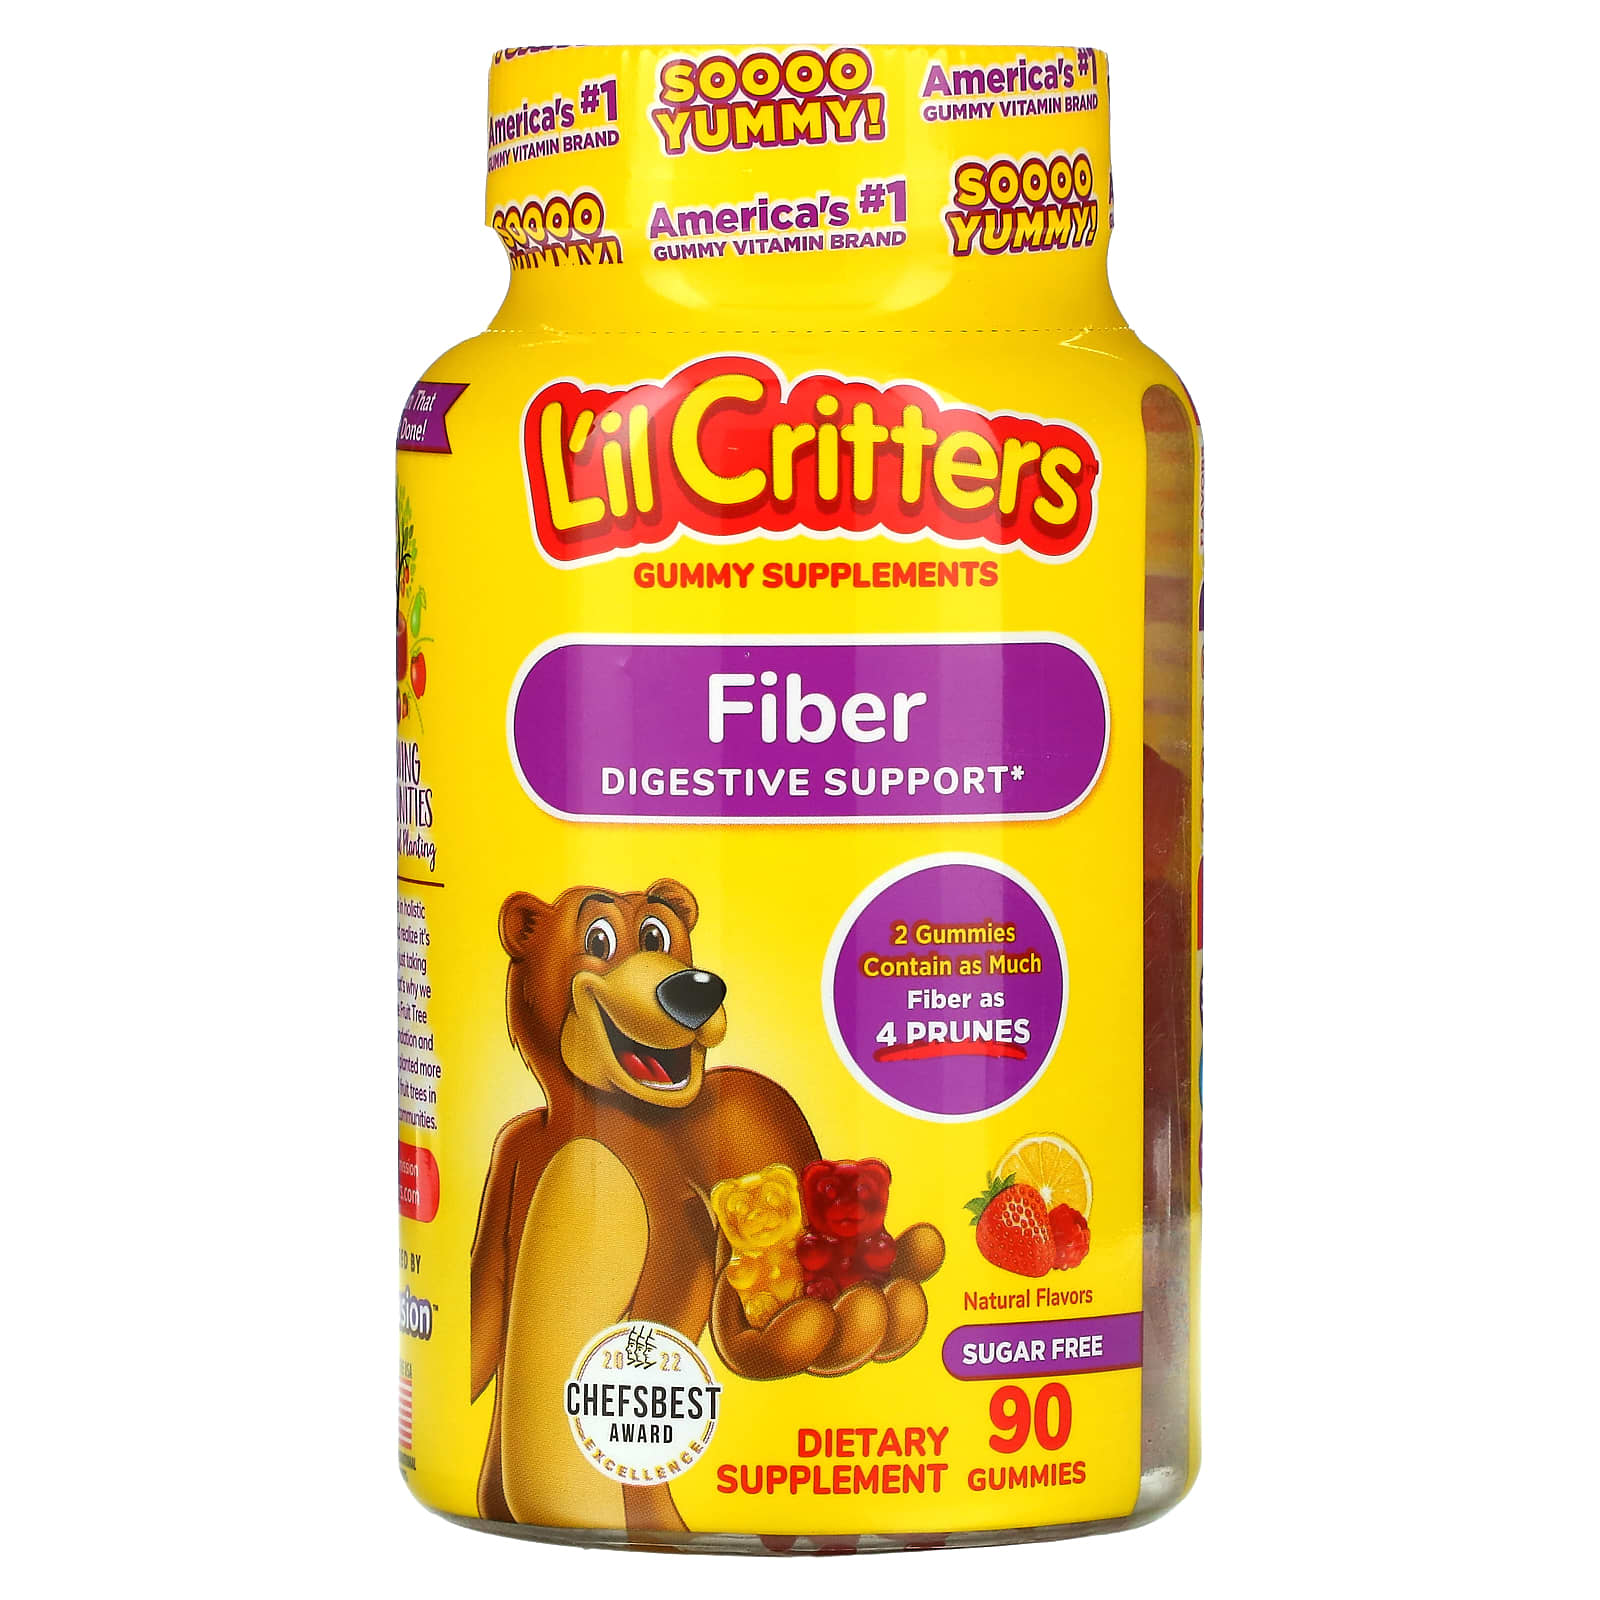 l-il-critters-fiber-digestive-support-natural-flavors-90-gummies